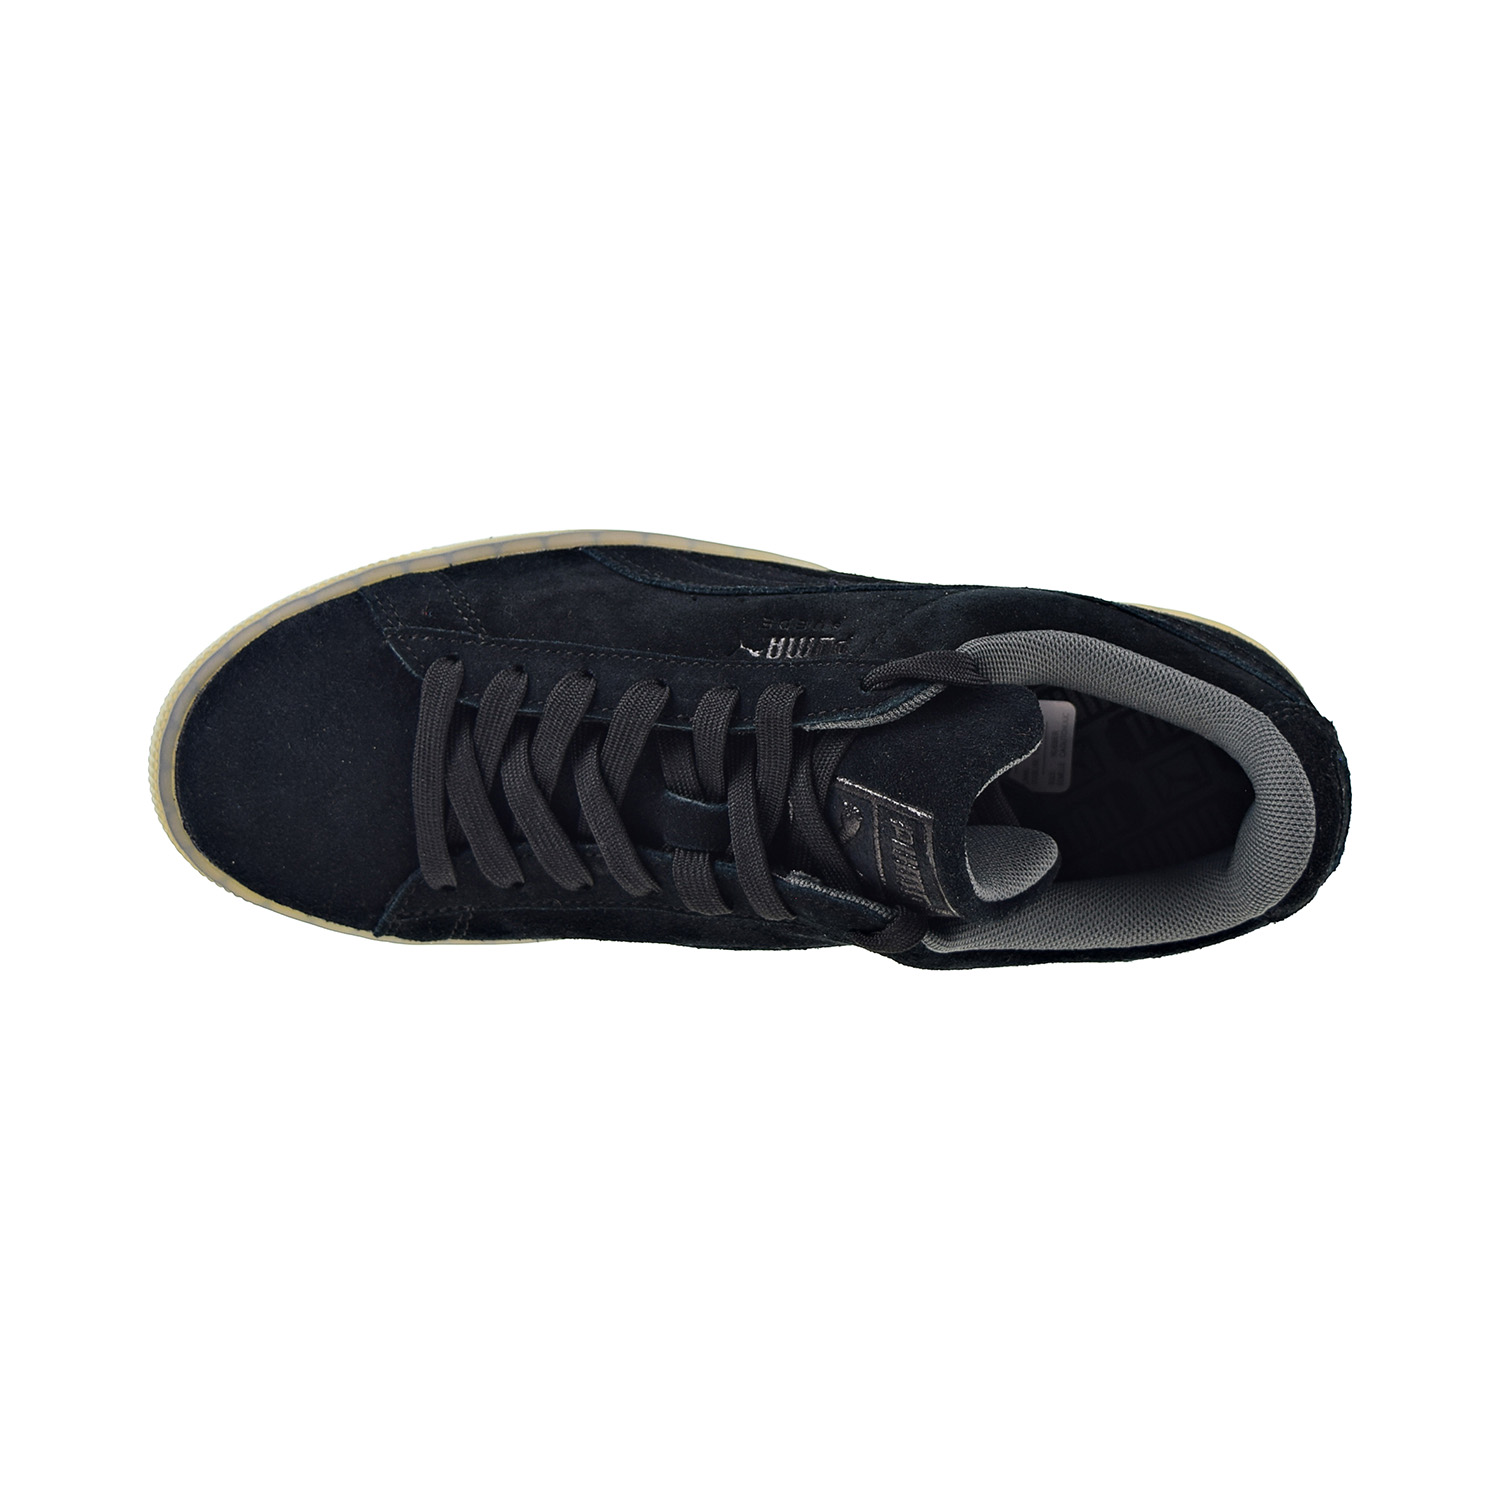 Puma Suede Classic Fade Future Men's Shoes Black 361351-02 - image 5 of 6